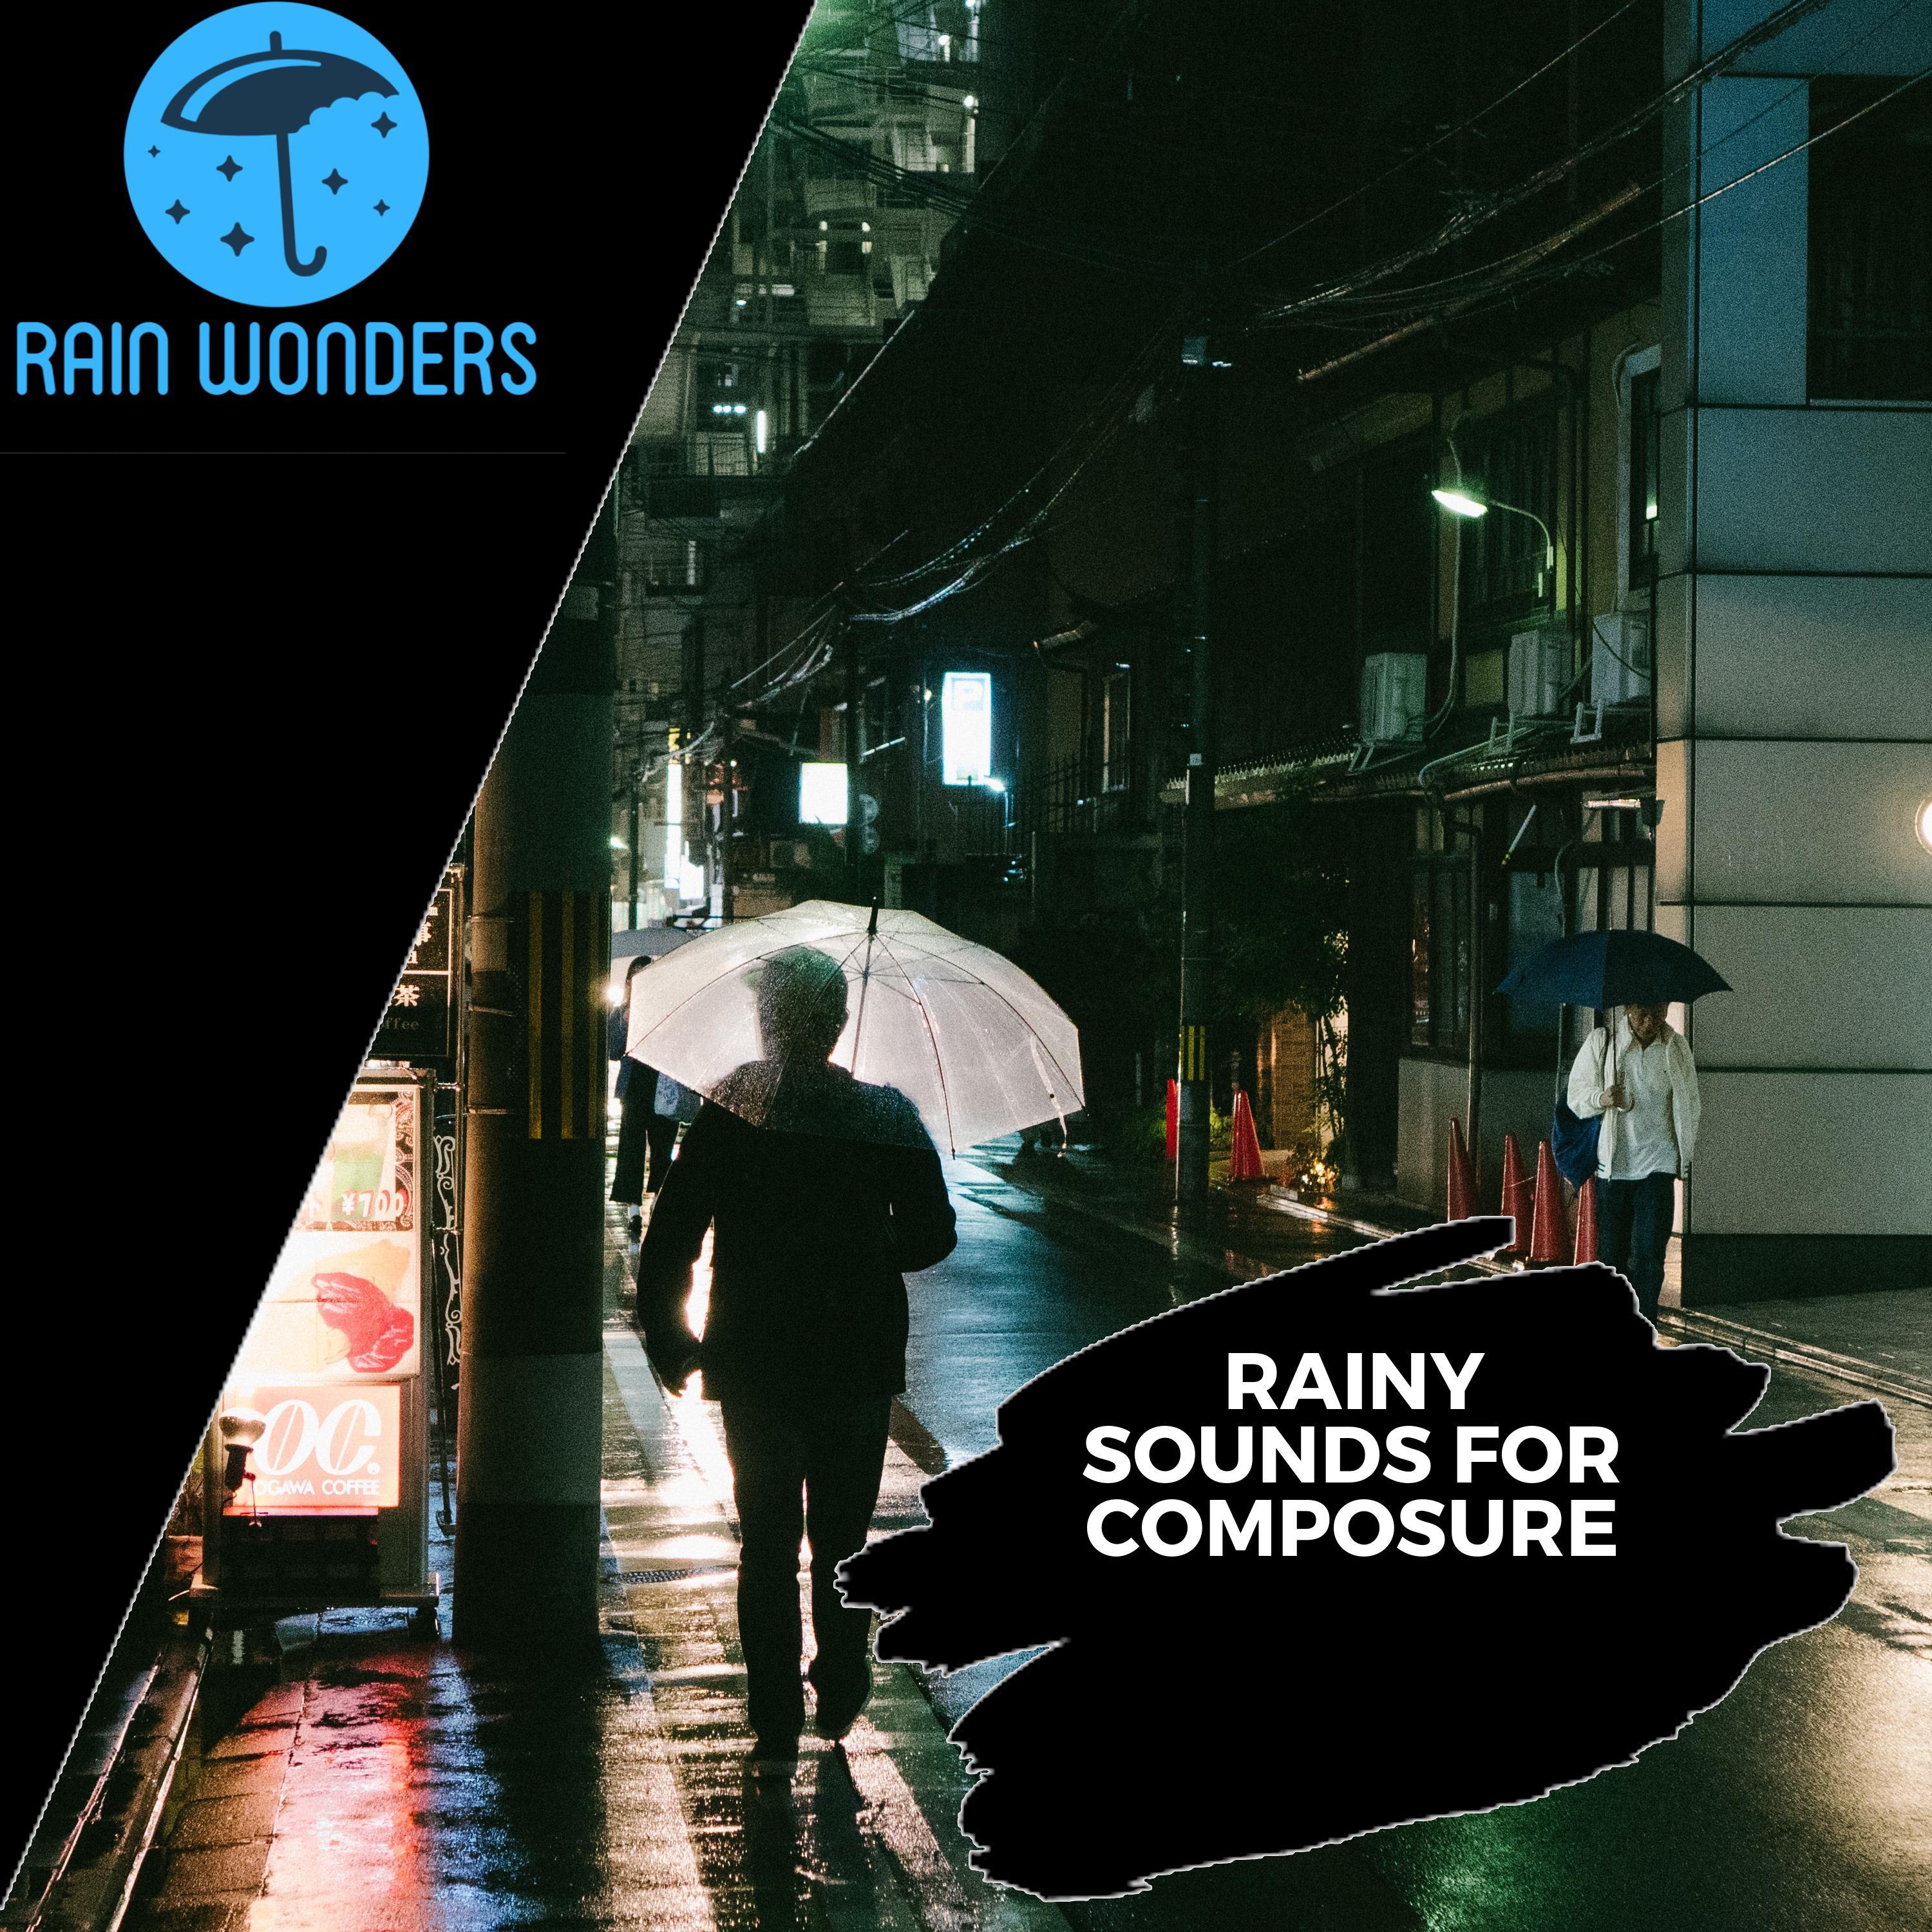 Awful Rain Music Collection - Voice of Rain God